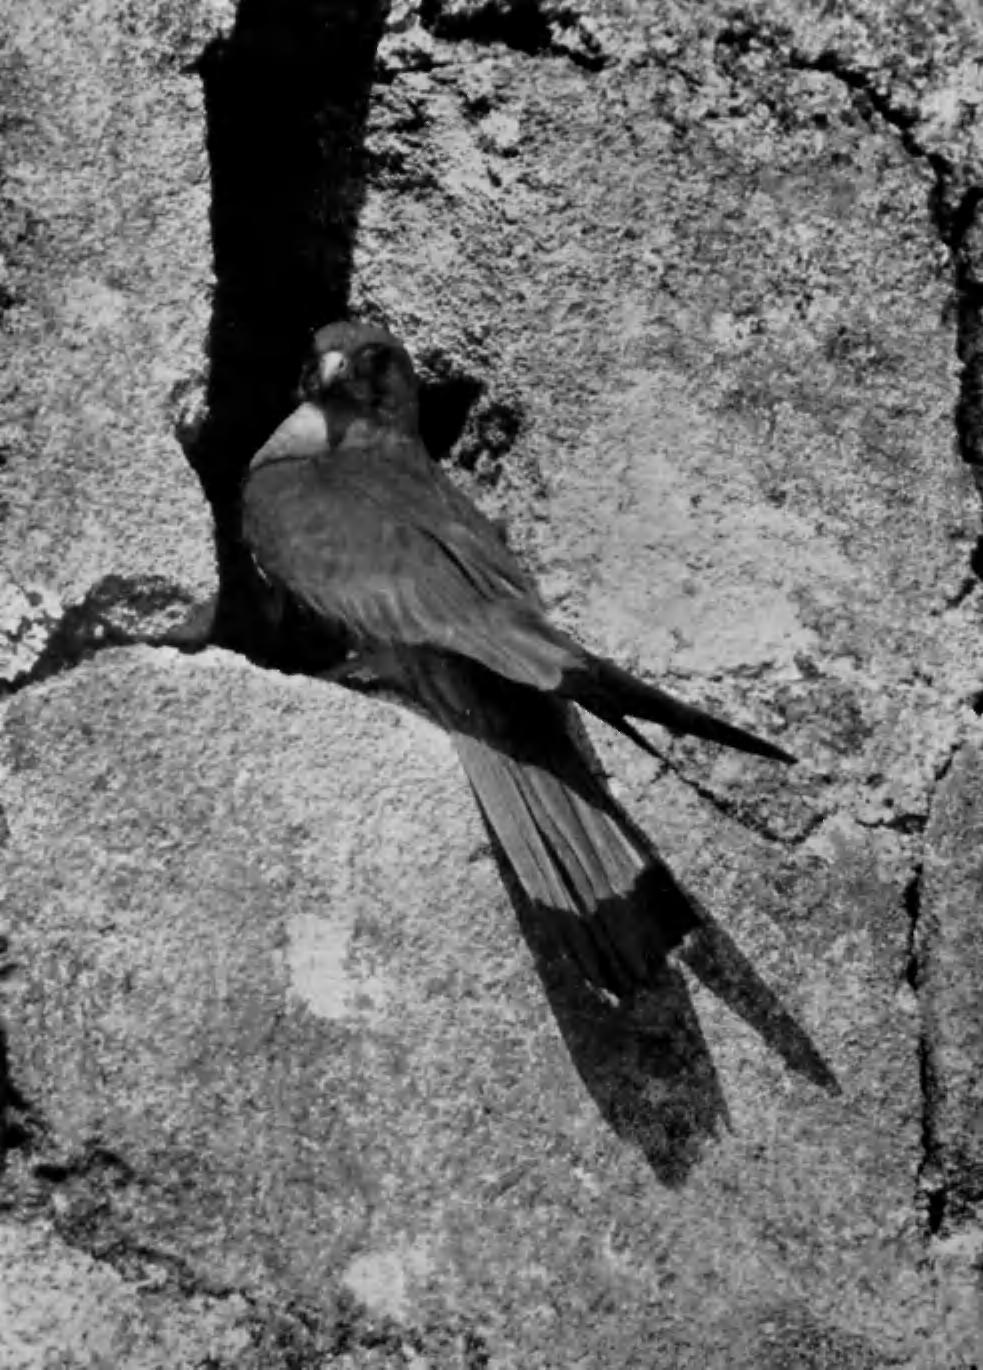 British Birds, Vol. xlvii. PI. 18. LESSER KESTREL (Falco naumanni). ADULT MALE AT ENTRANCE TO NEST. L'ABBAVE DE MONTMAJOUR, NEAR ARLES, FRANCE. MAY, 1953. (Photographed by C. C. DONCASTEK).